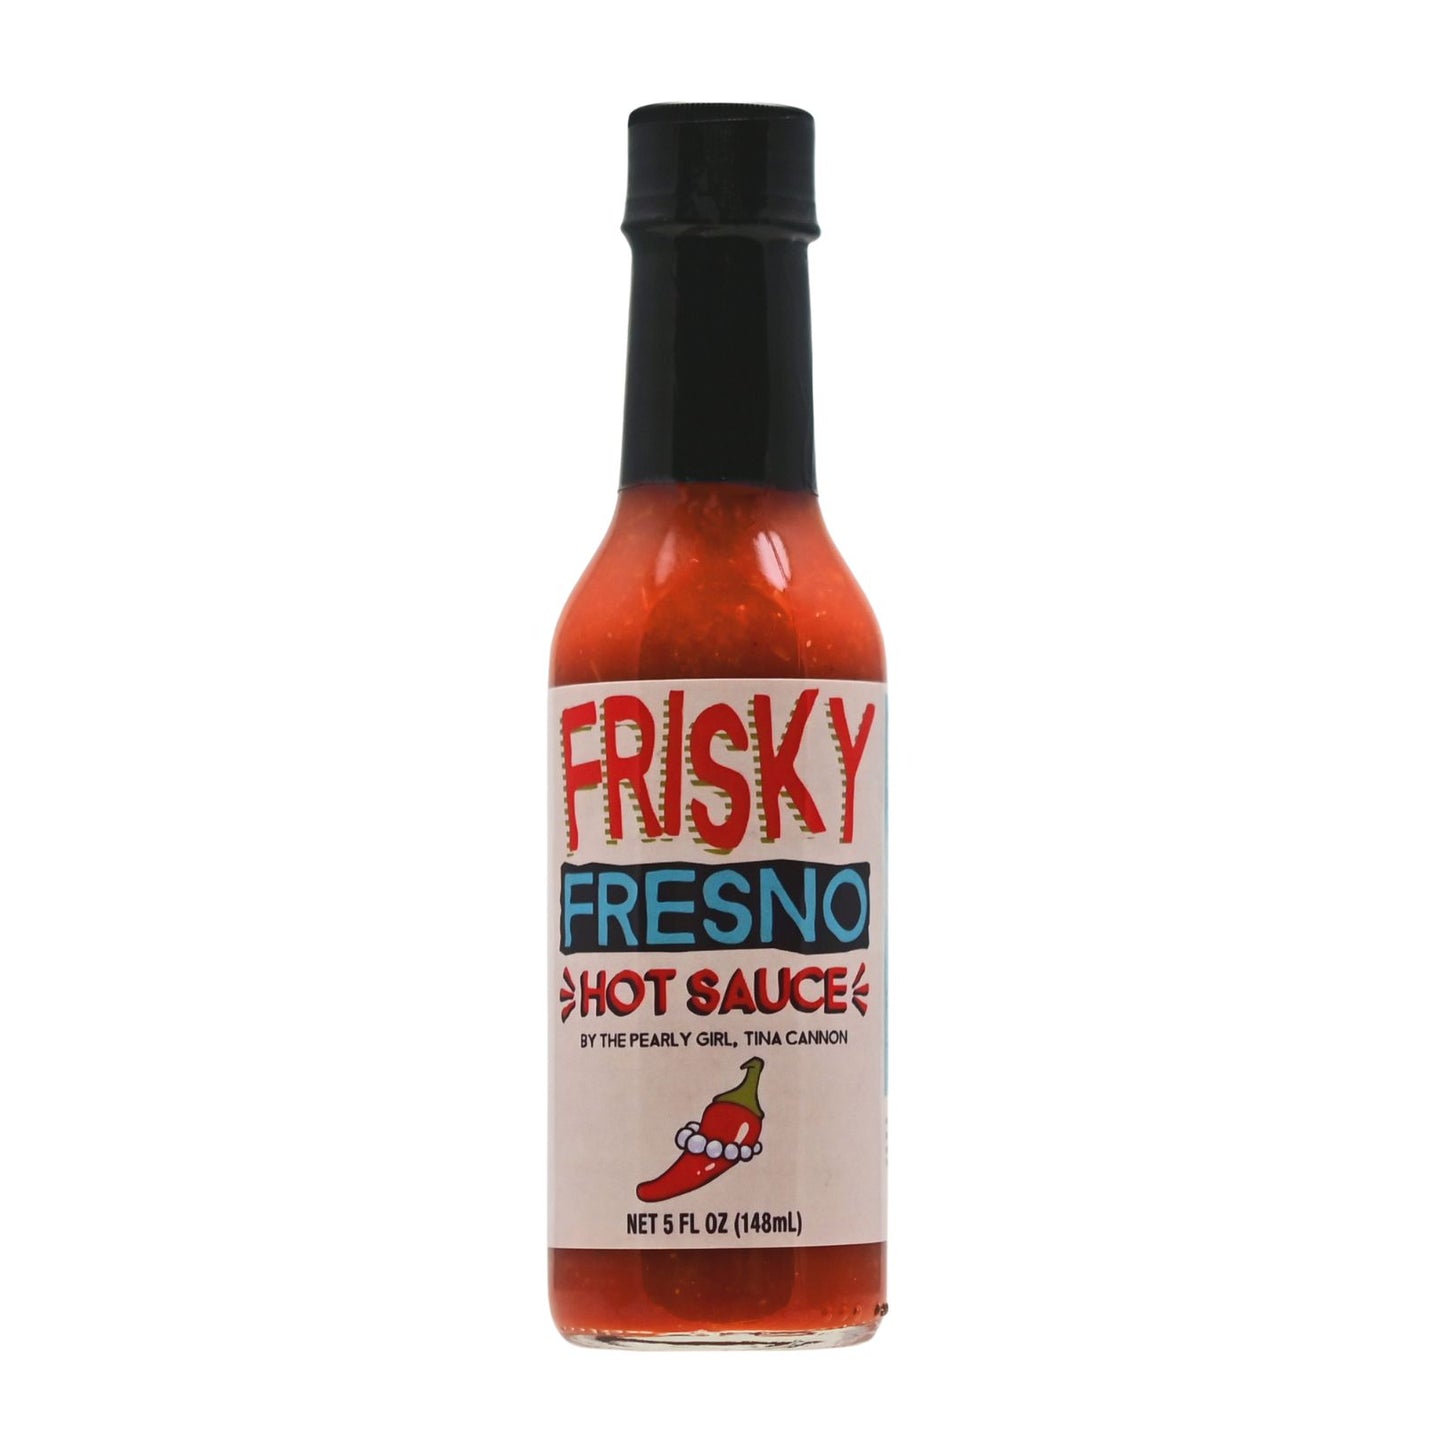 Frisky Fresno Hot Sauce by Tina Cannon